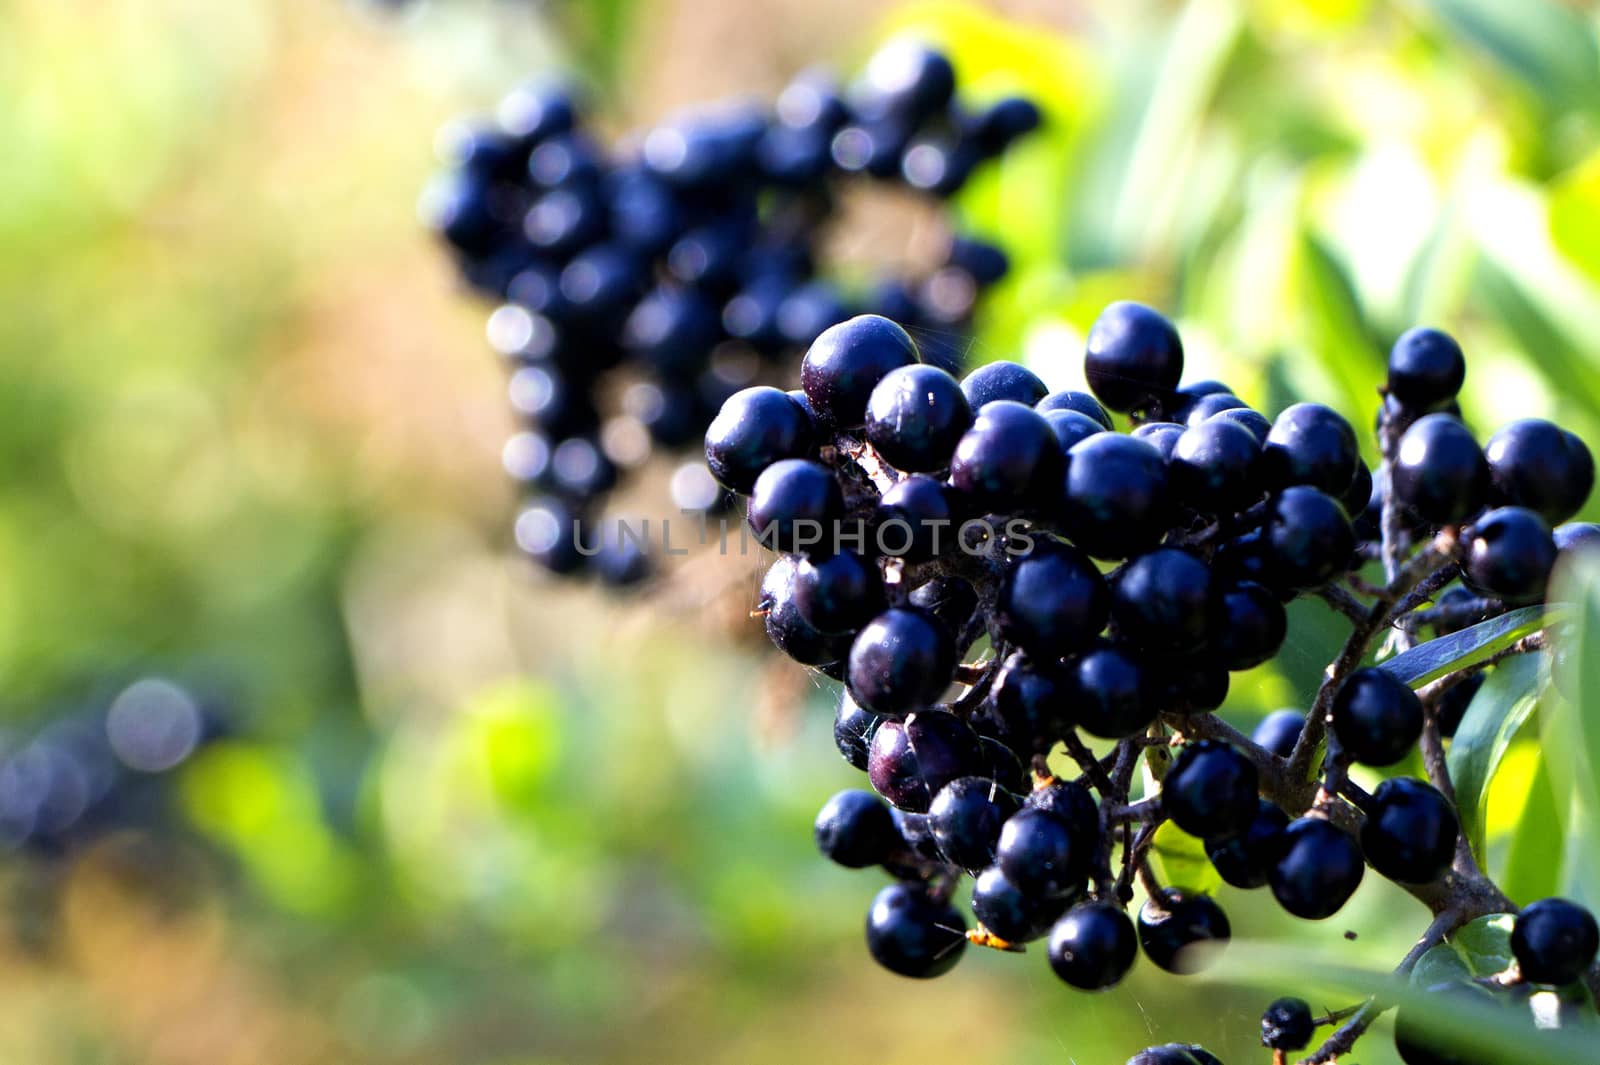 Black Berries by Mads_Hjorth_Jakobsen